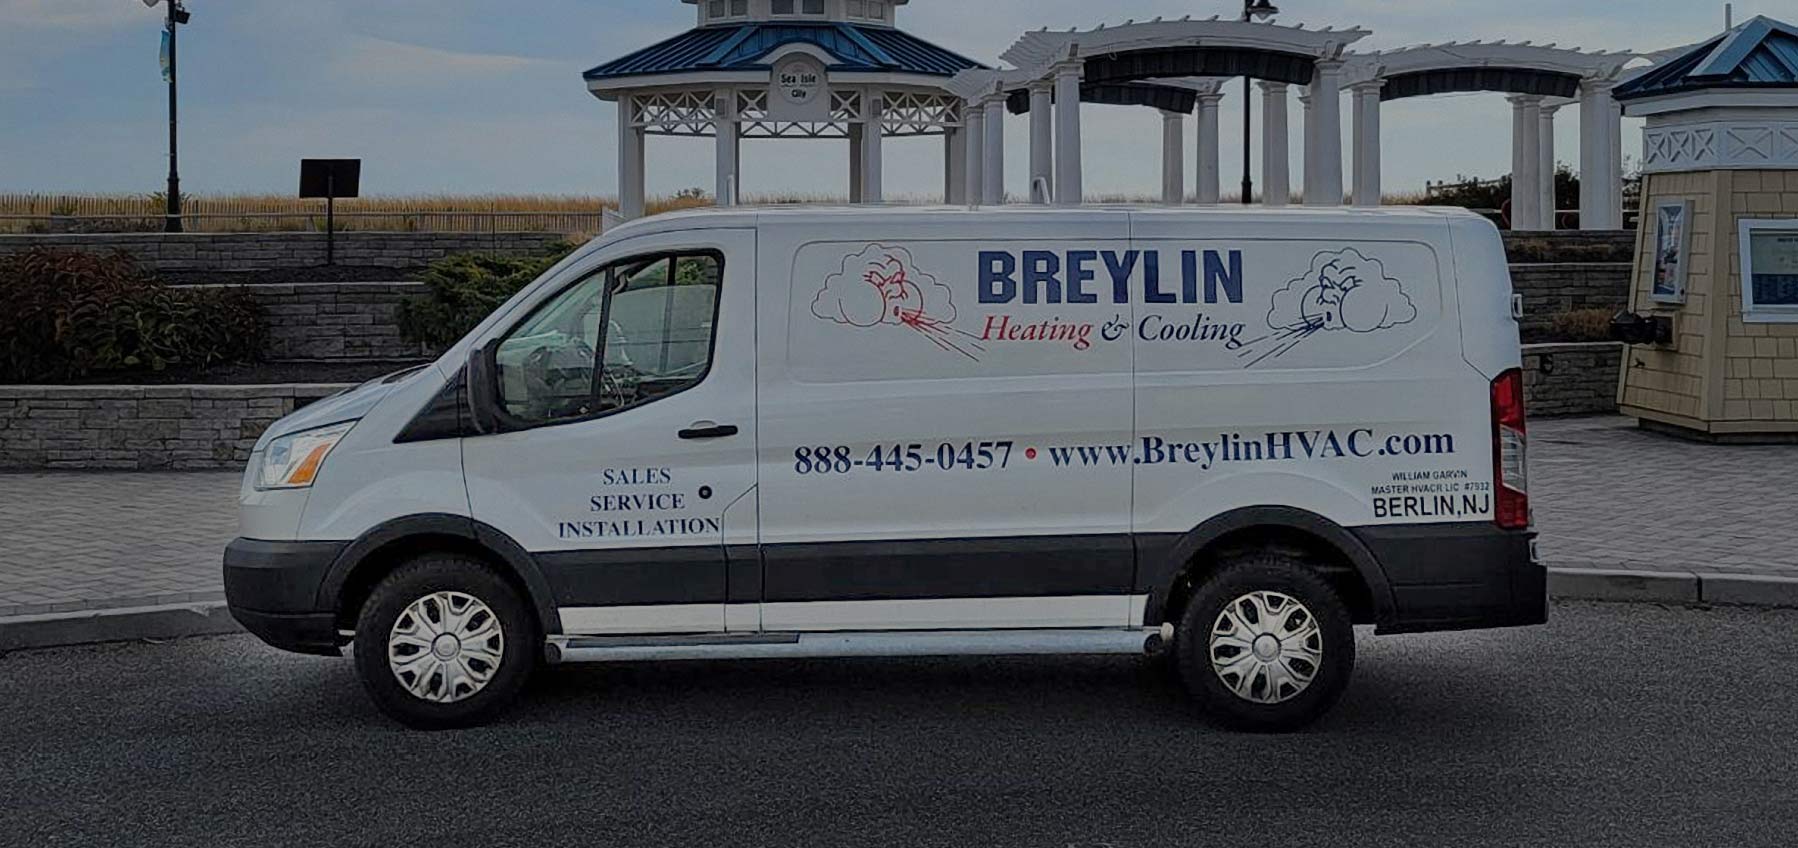 Breylin Heating & Cooling | New Jersey Shore Heater Air Conditioner HVAC Service